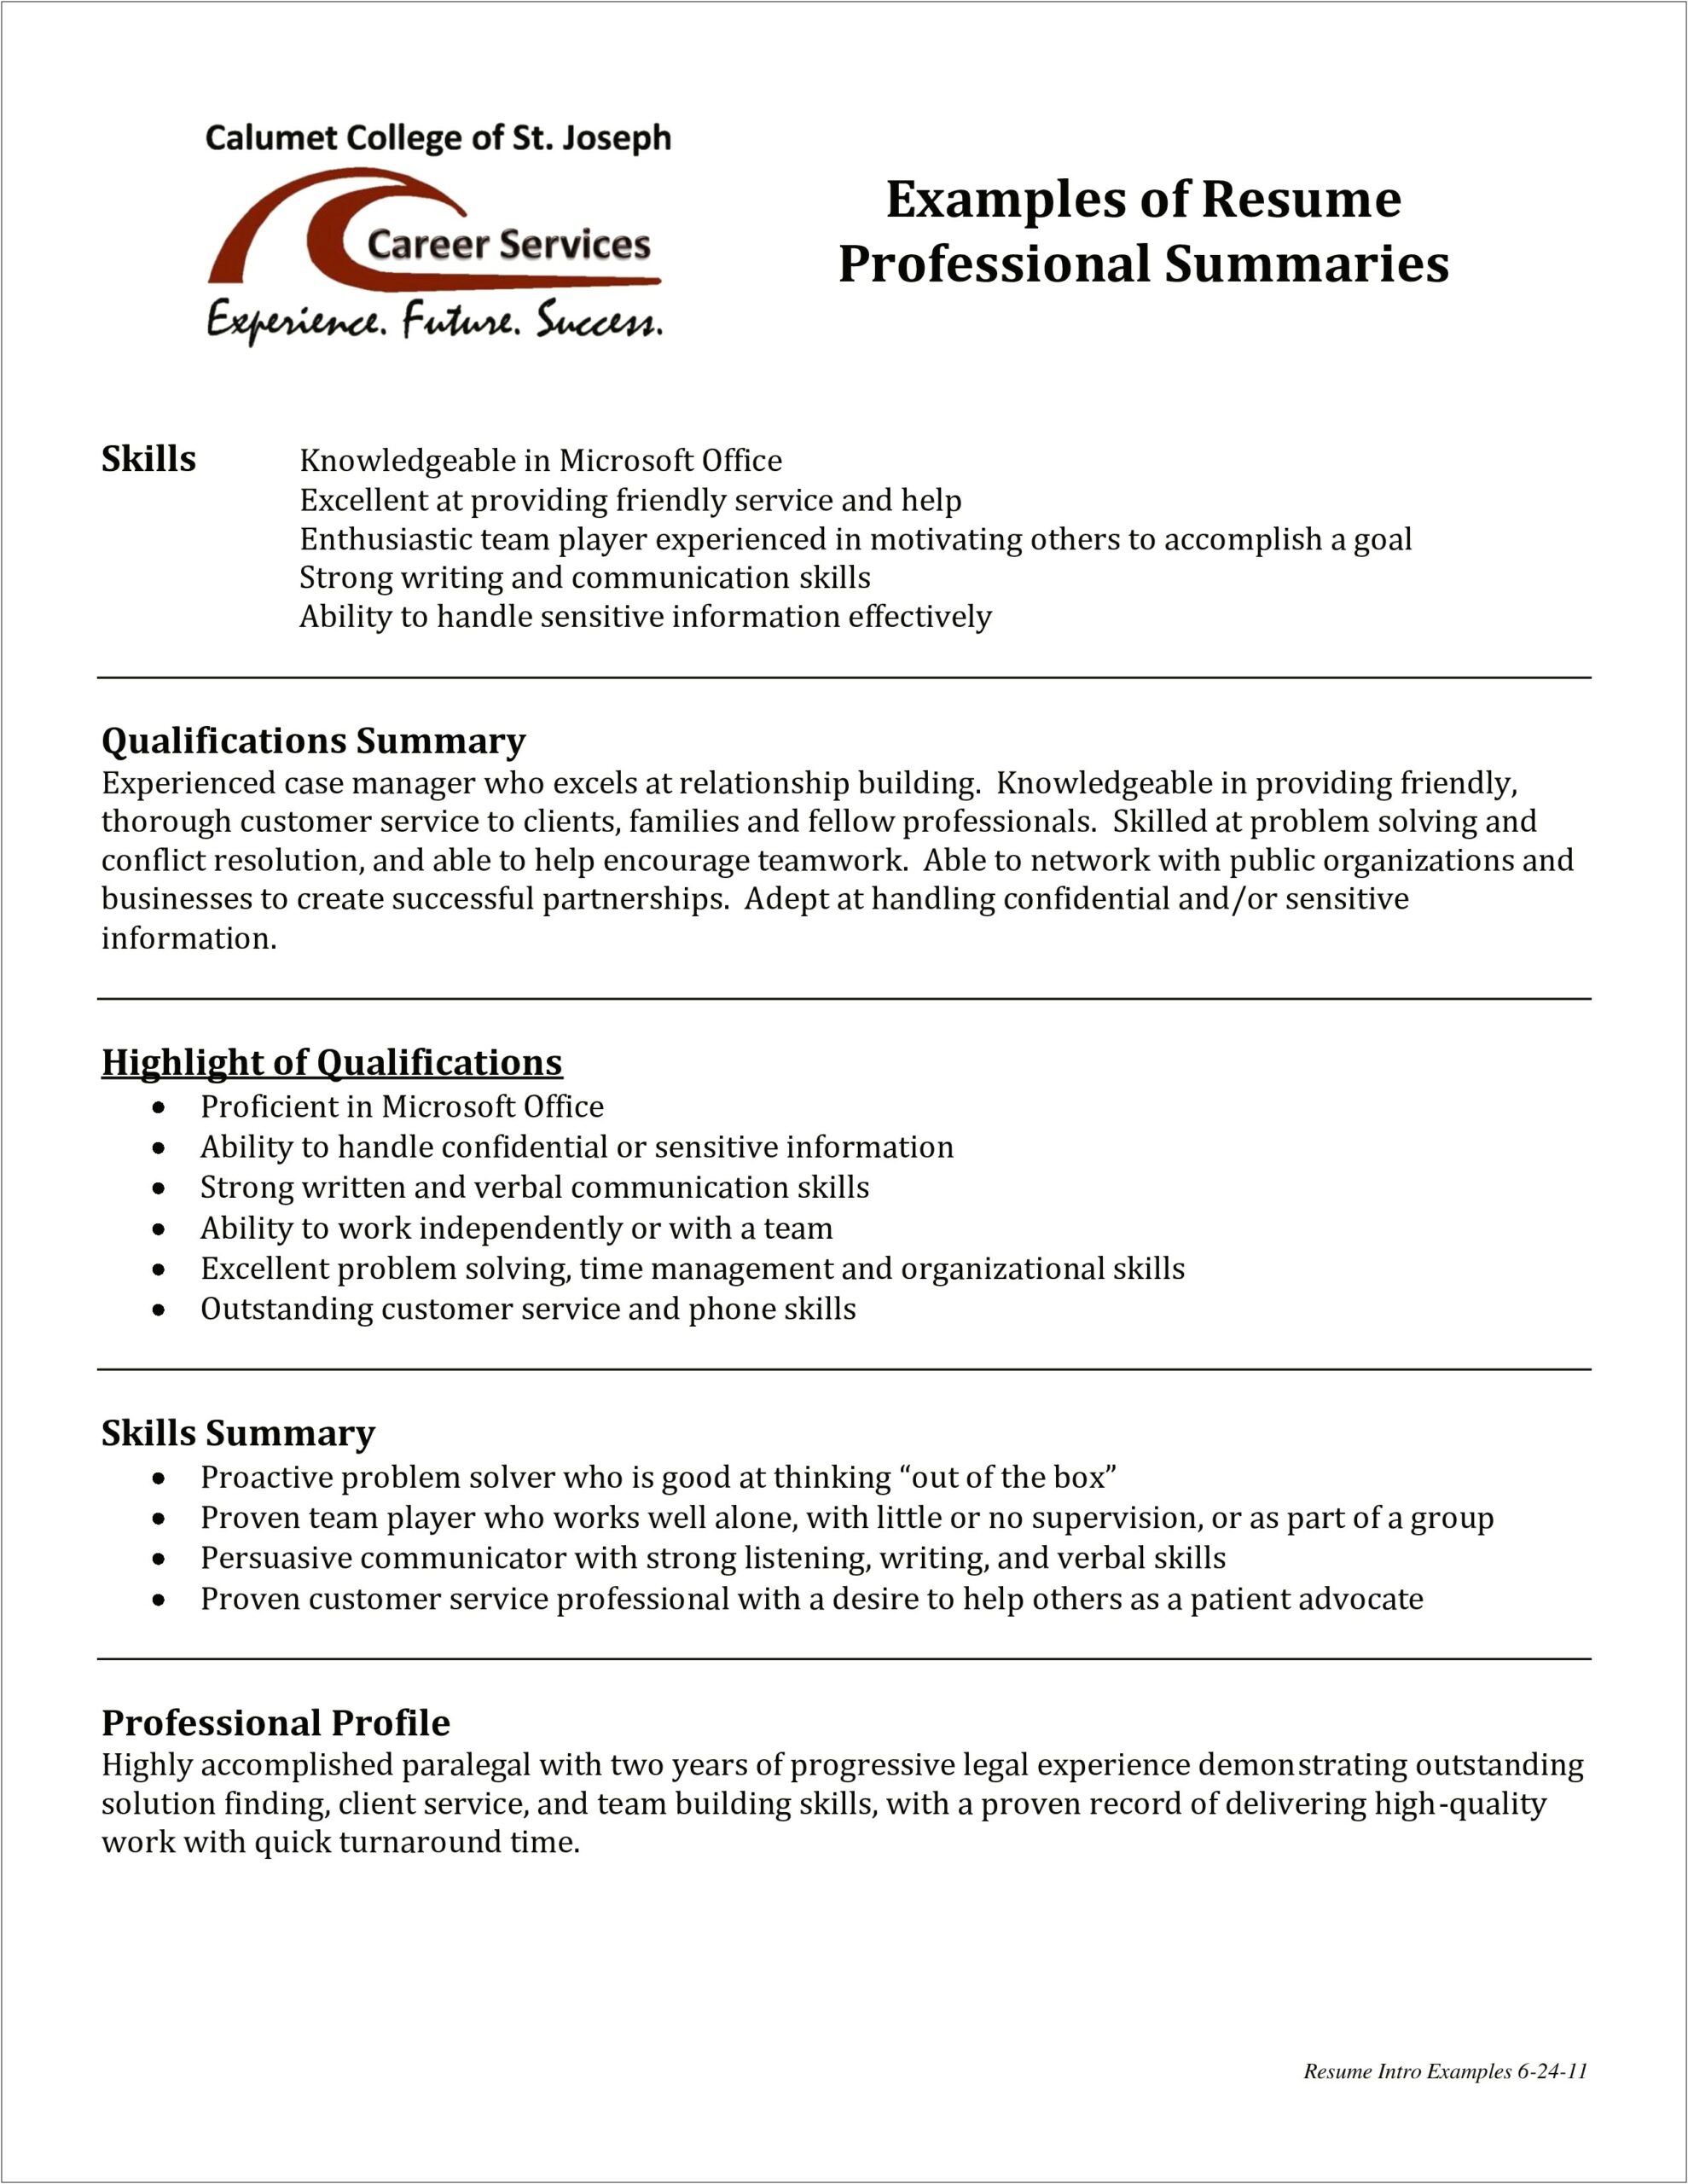 Resume Professional Summary For Customer Service